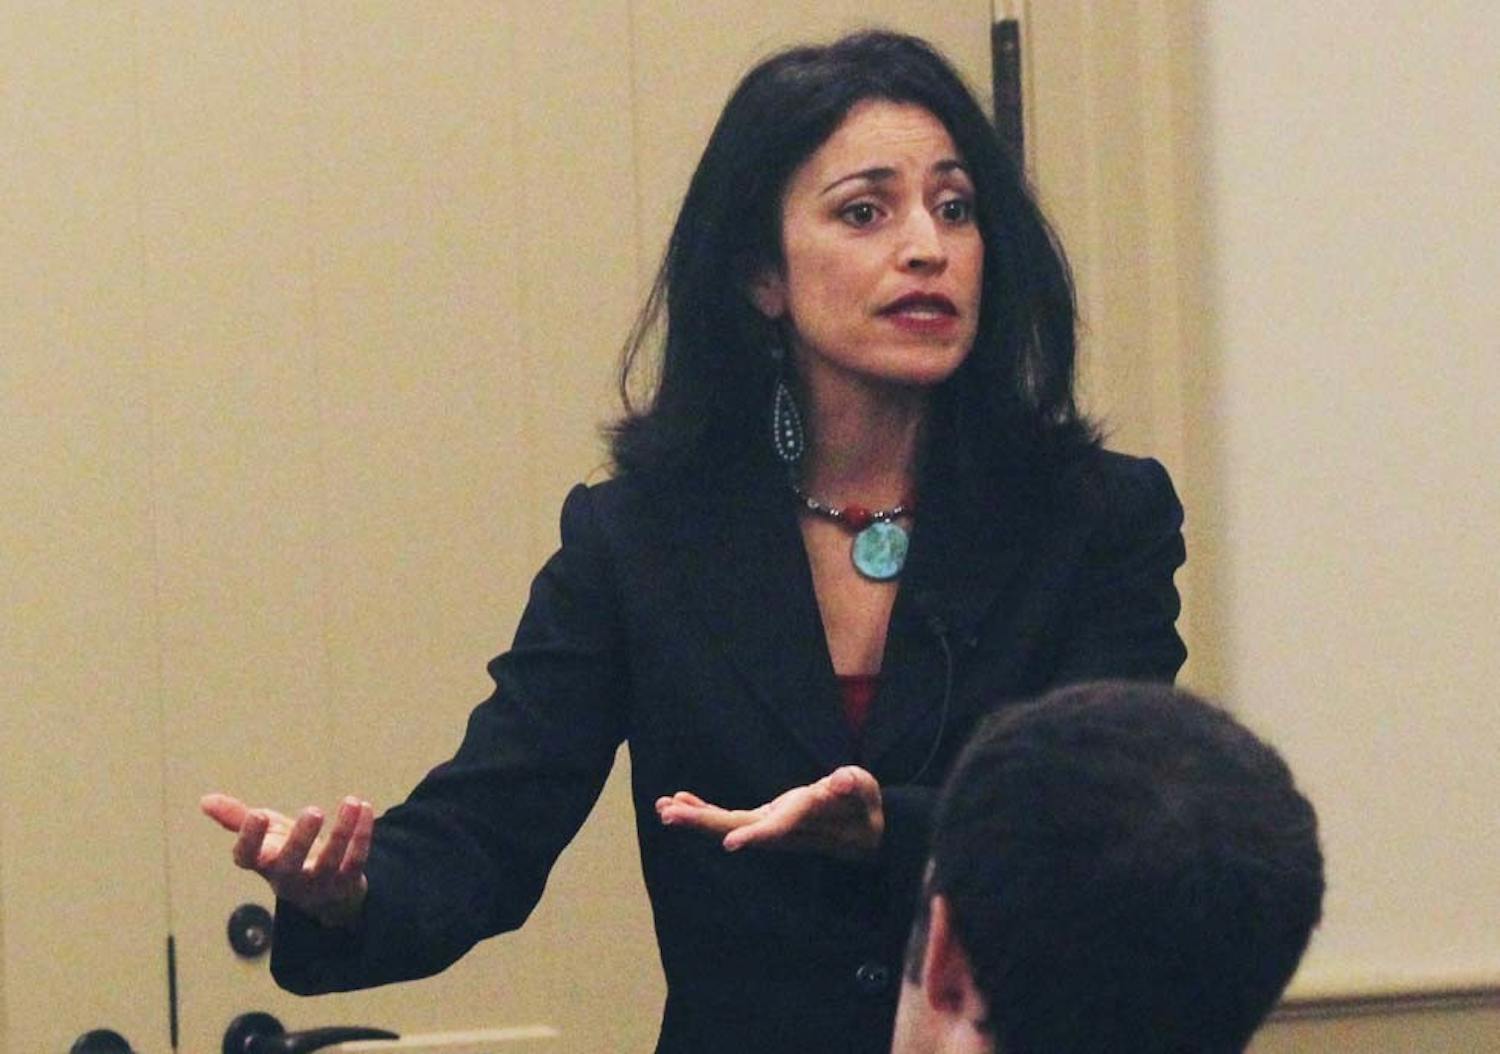 Photo: UNC hosts professor to discuss teaching math to minorities (Taylor Hartley)